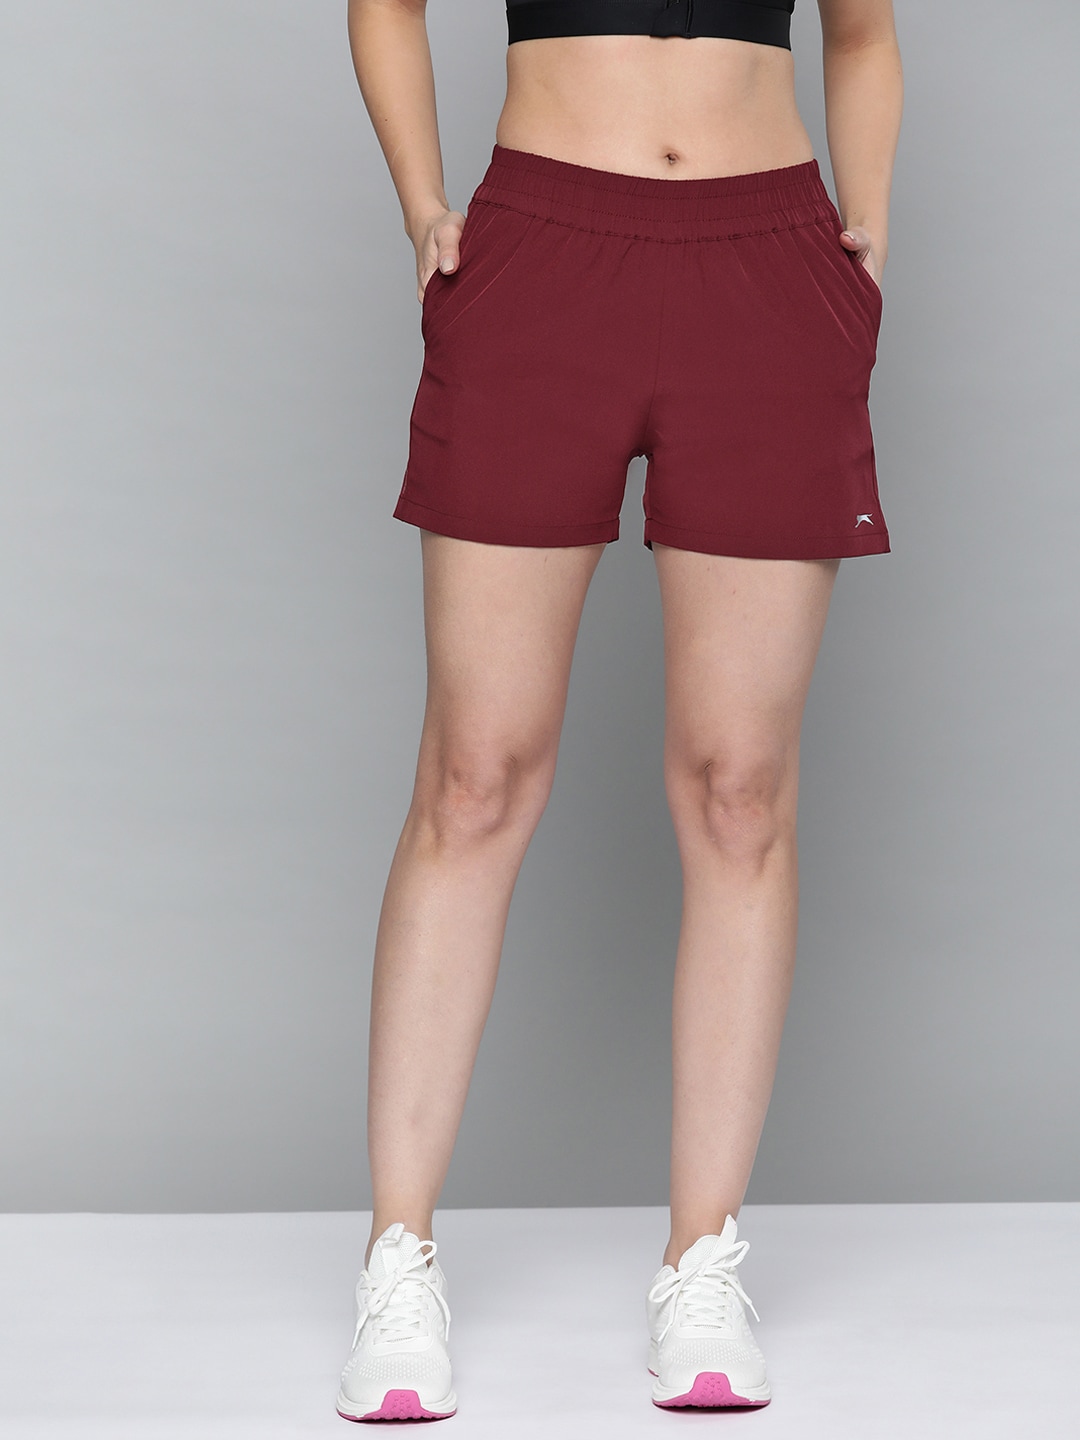 Slazenger Women Maroon Solid Sports Shorts Price in India